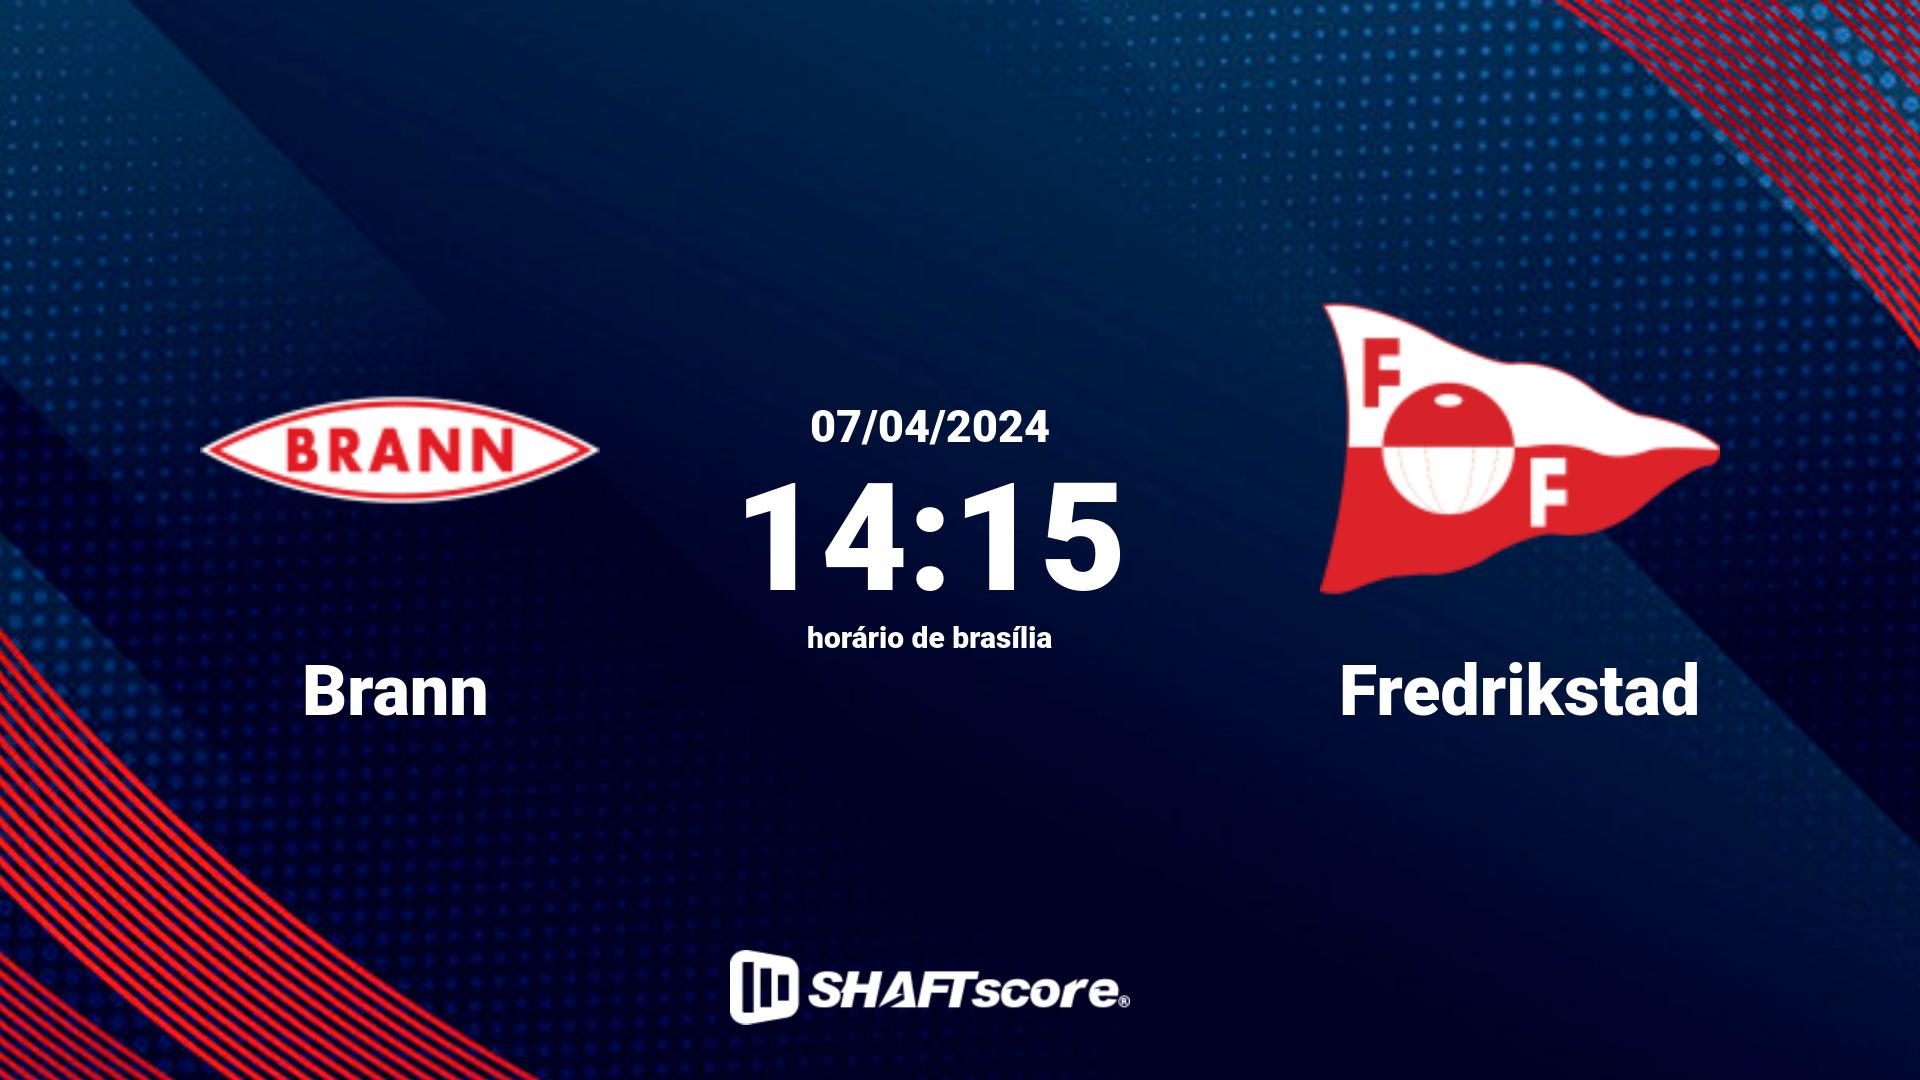 Estatísticas do jogo Brann vs Fredrikstad 07.04 14:15